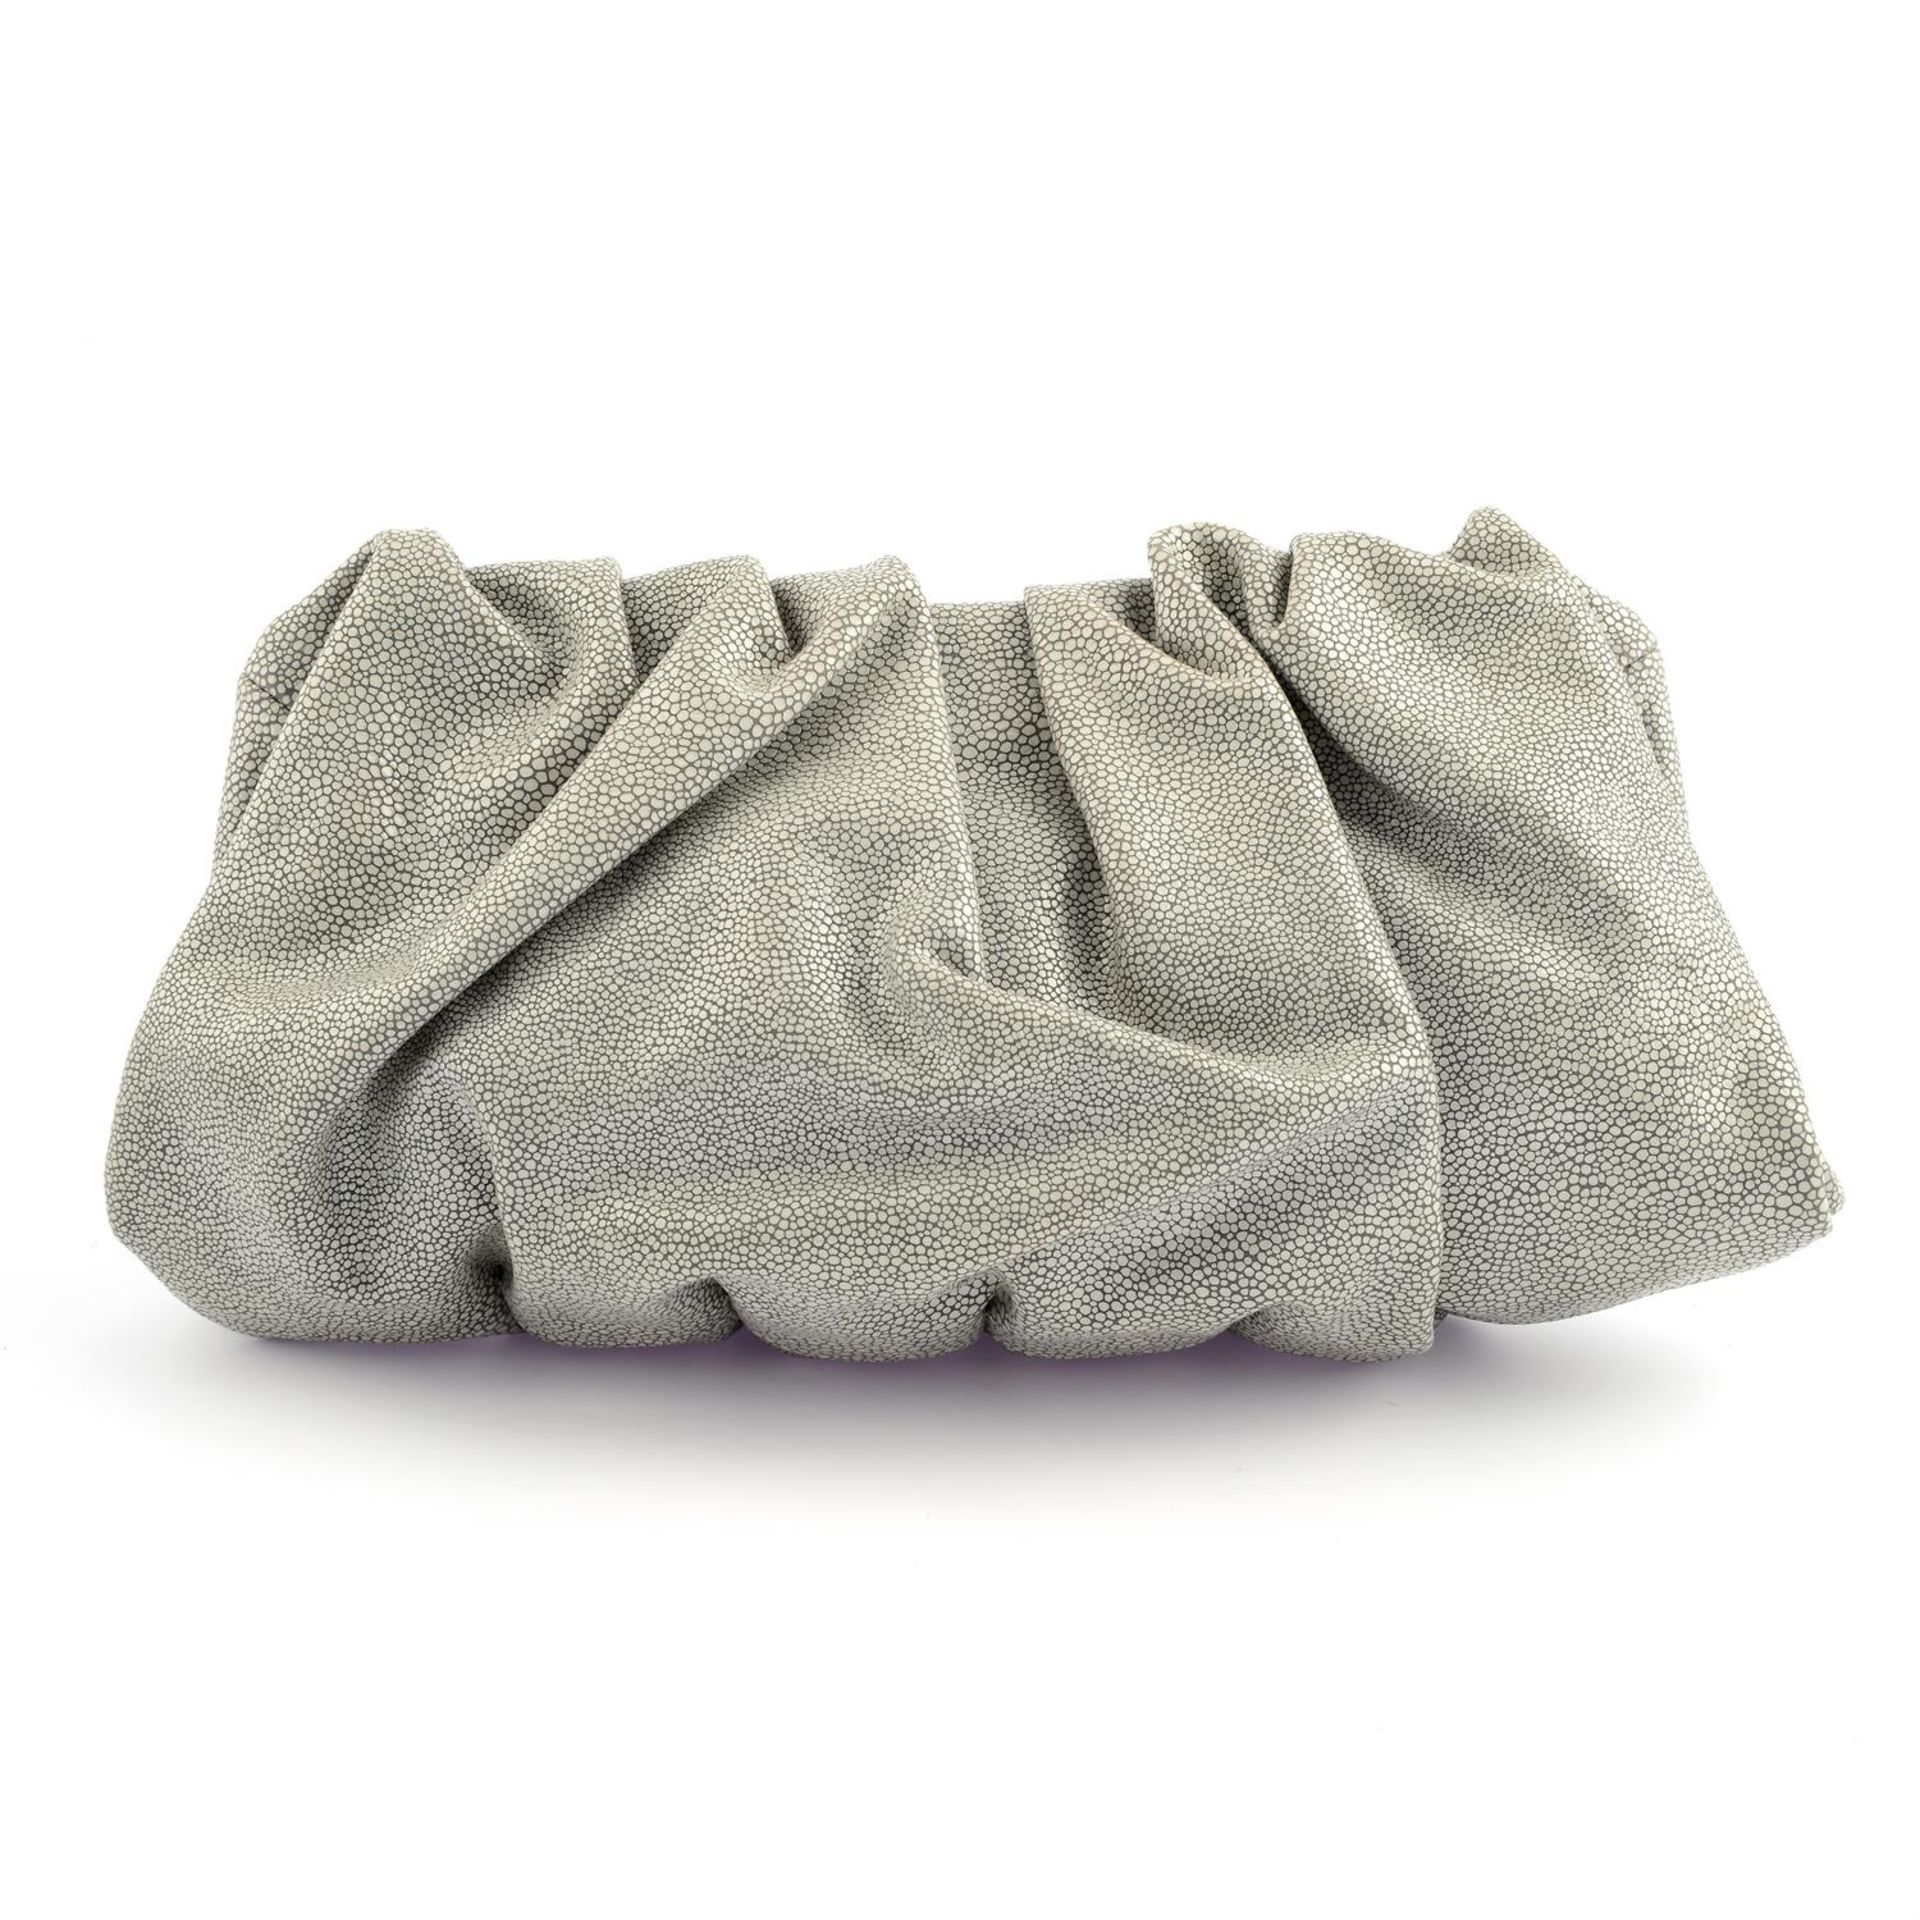 ARMANI - a grey imitation shagreen leather clutch. - Image 2 of 4